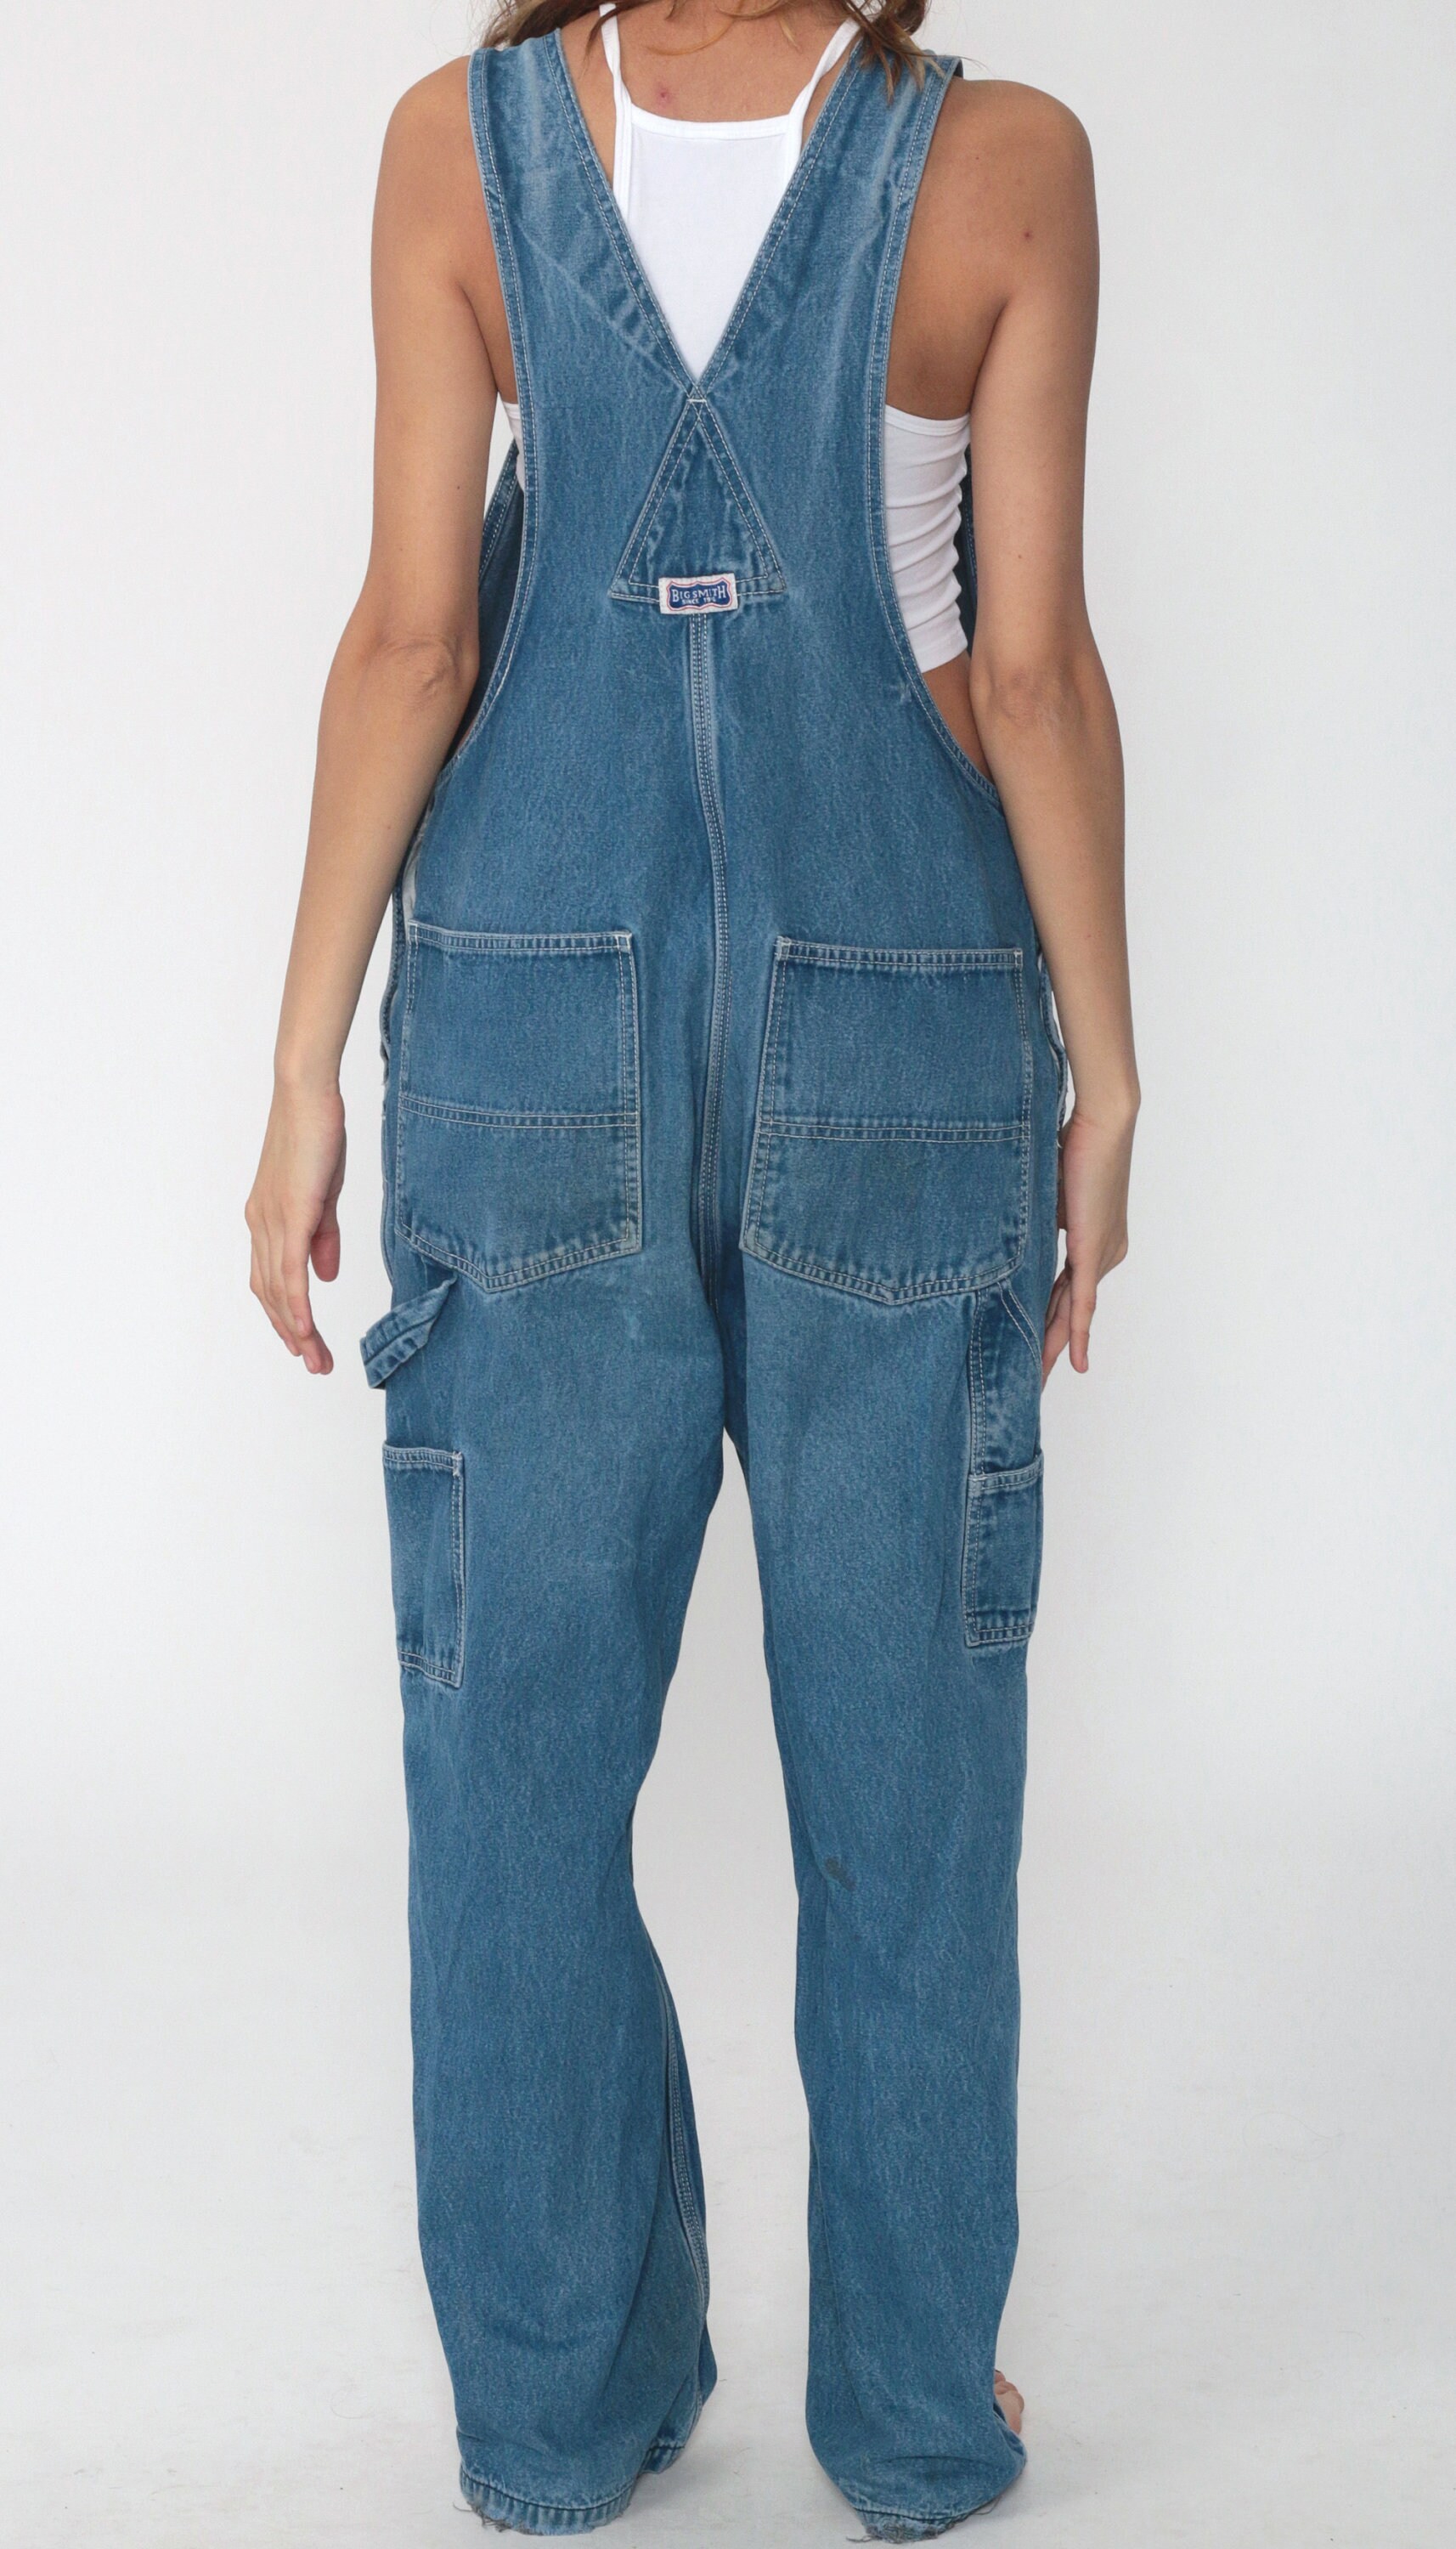 Big Smith Jean Overalls 90s Denim GRUNGE Pants Coveralls Work Wear ...